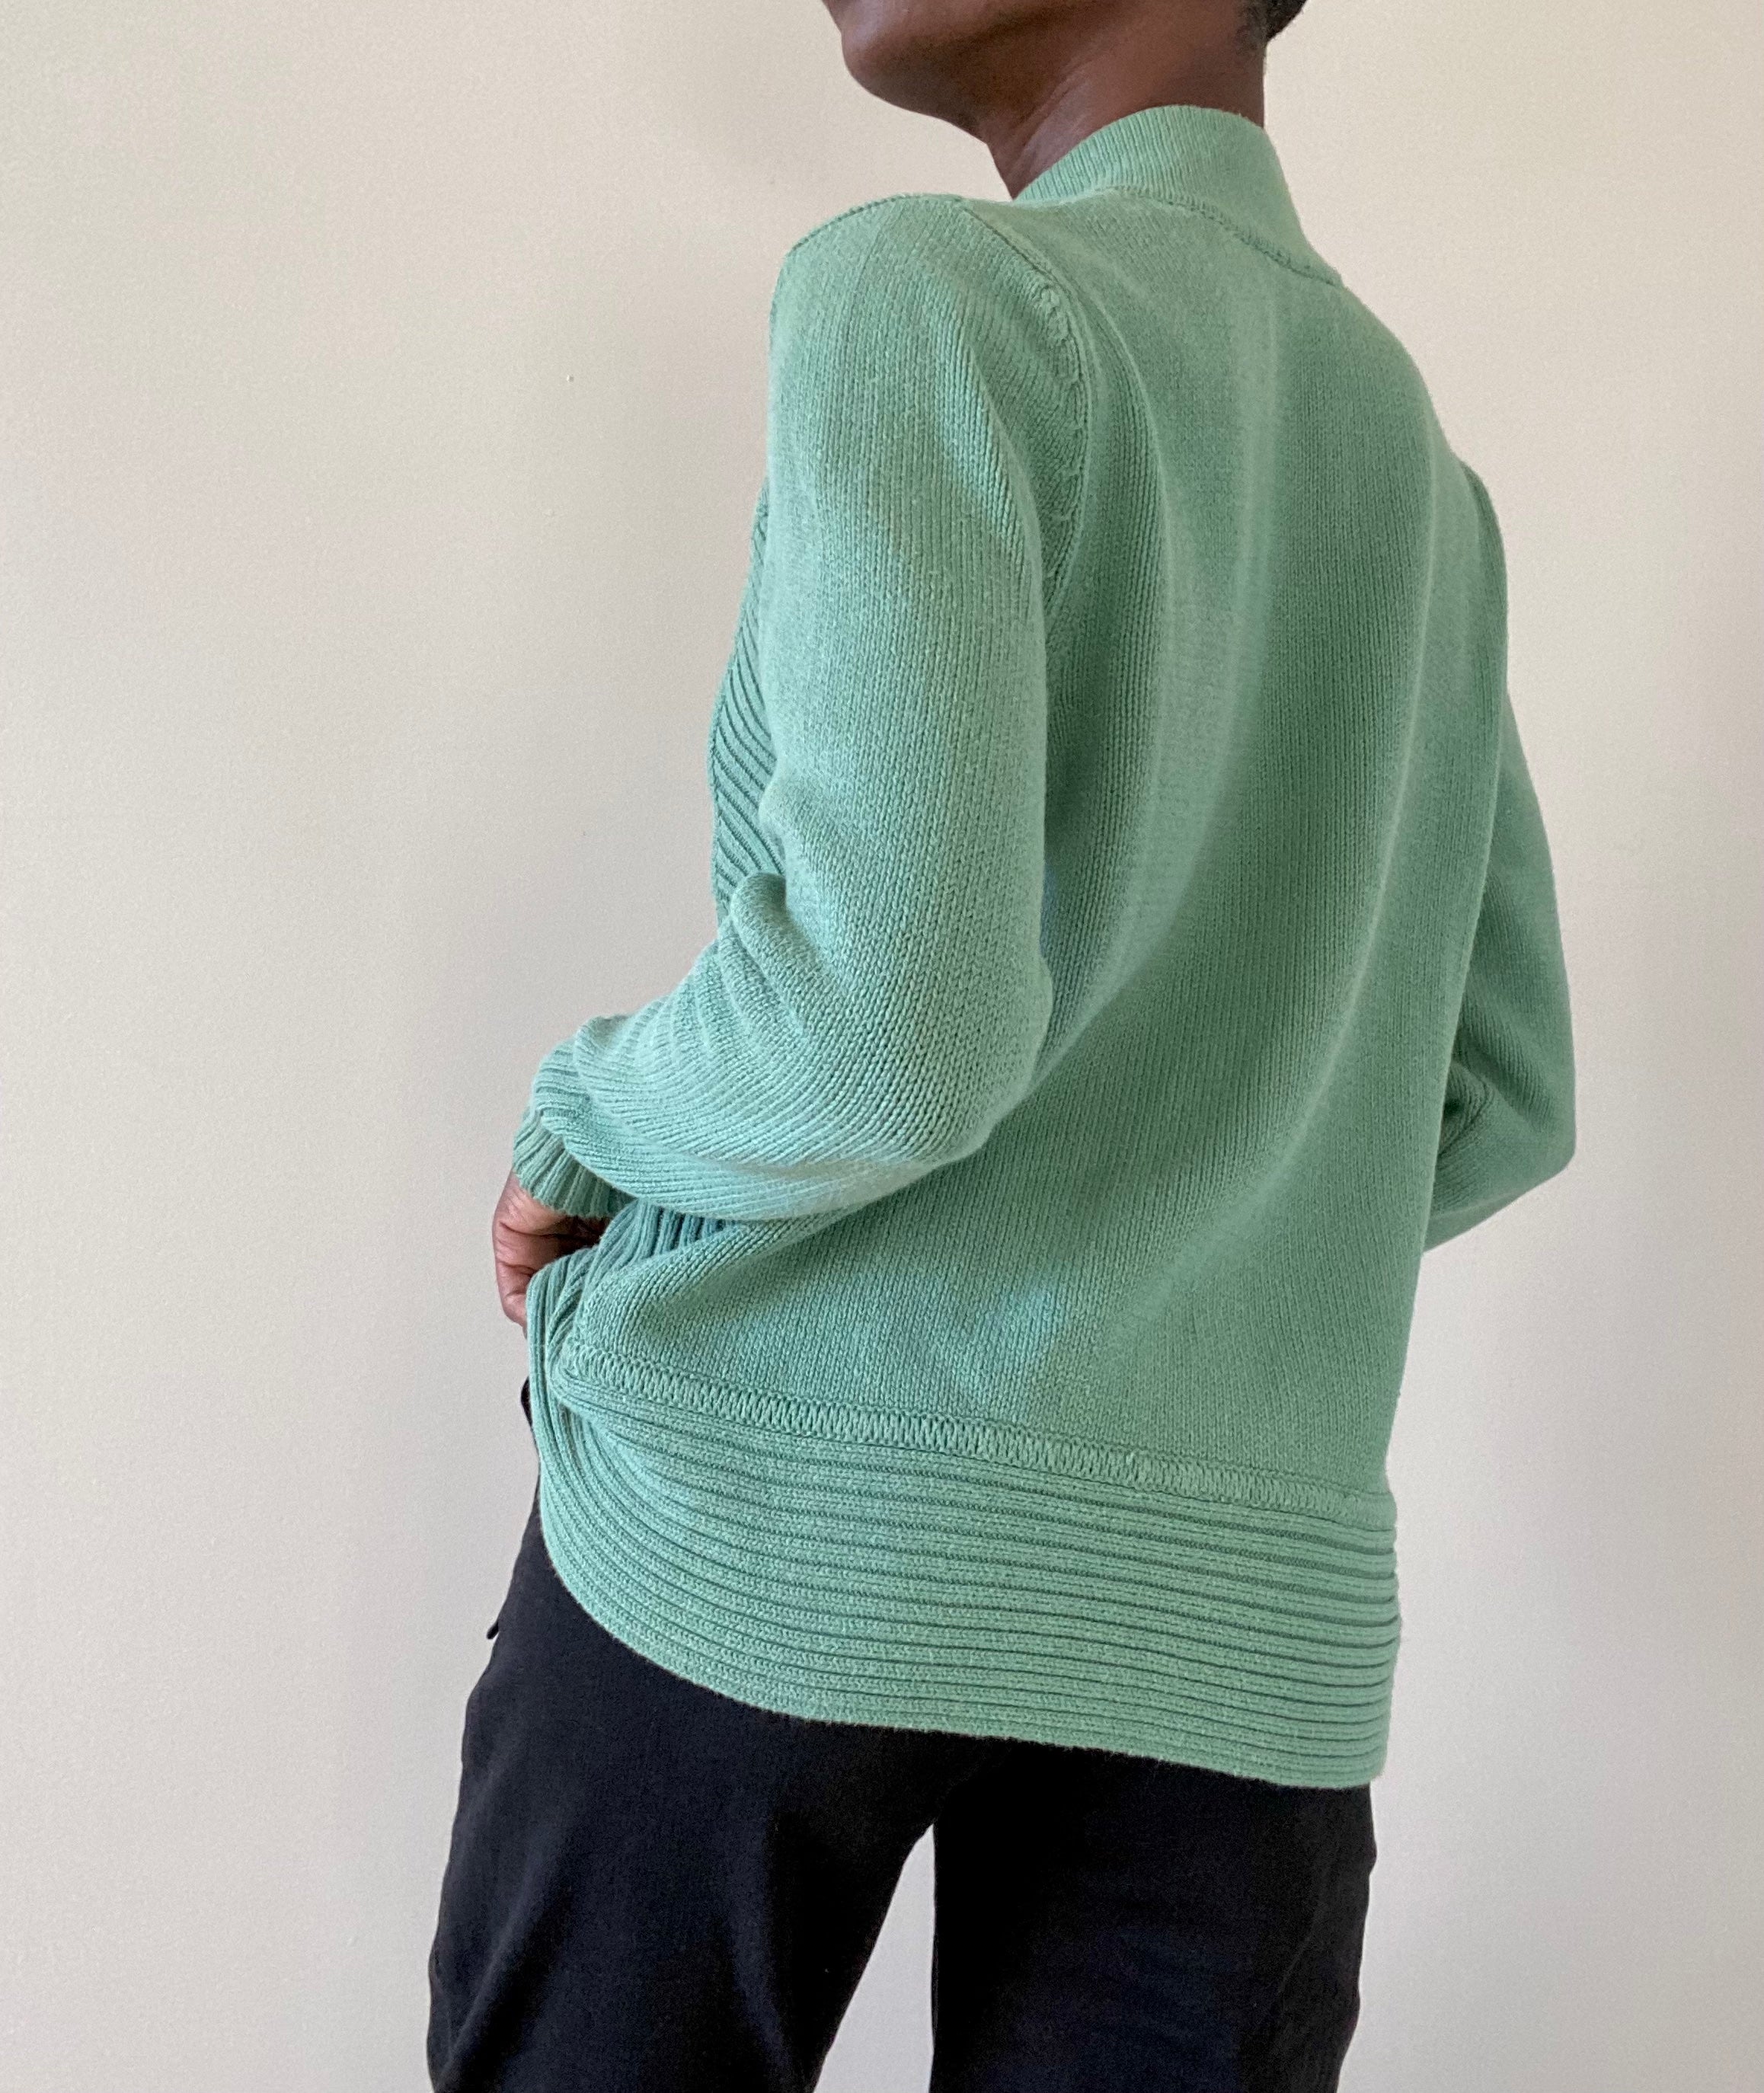 Turquoise Knit Cardigan